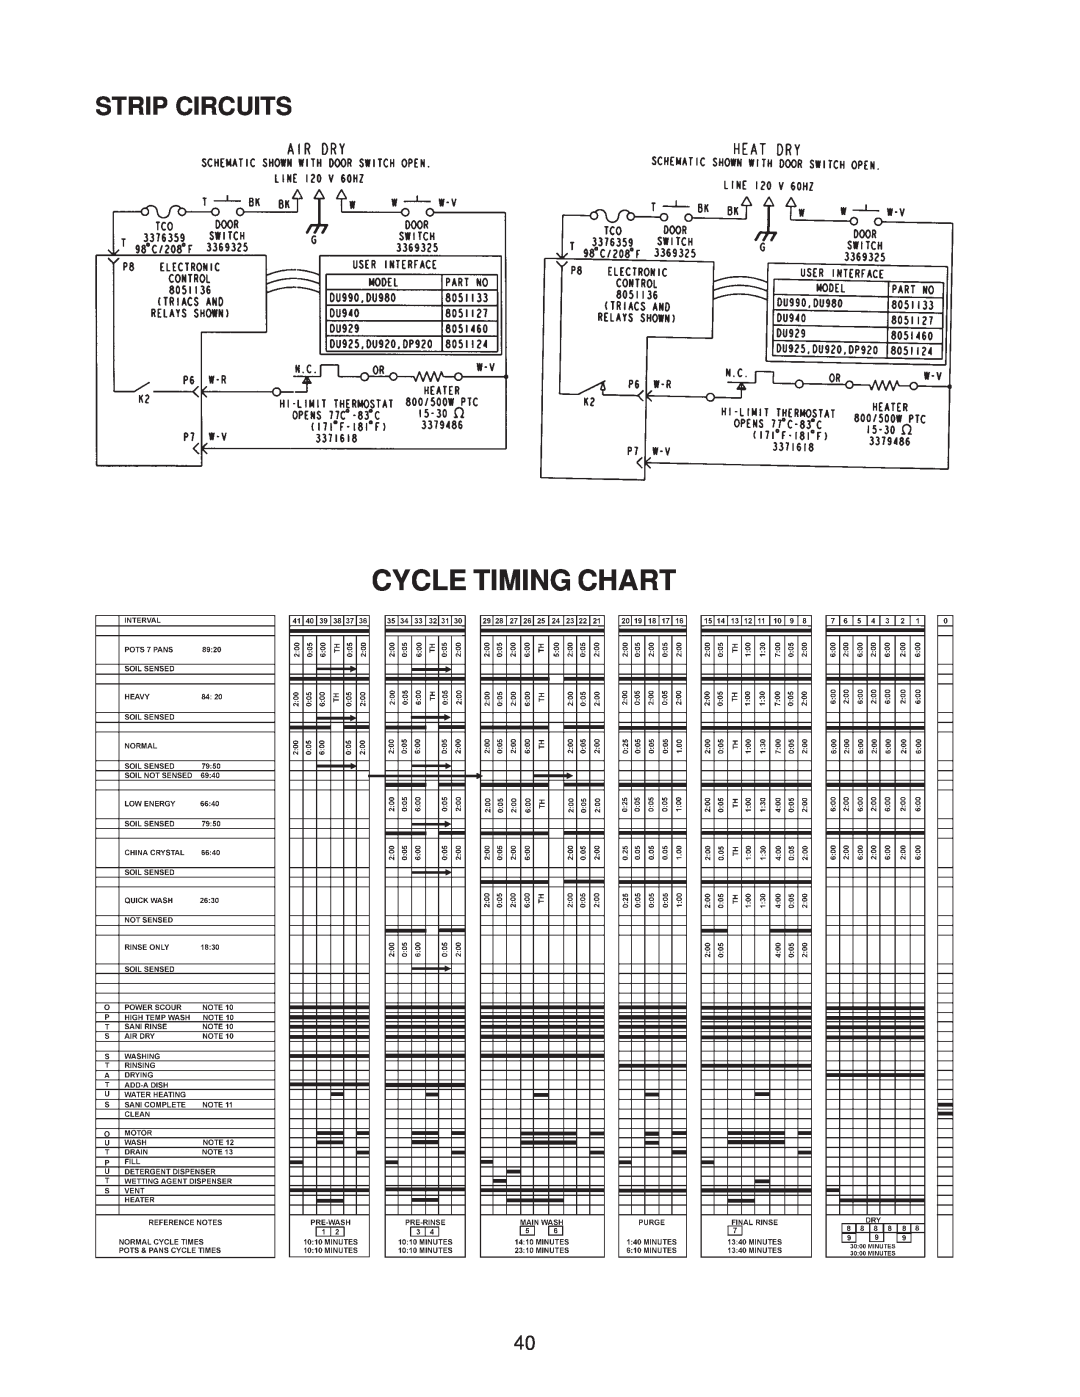 Kenmore DU910PFG, DU890DWG, DU920PFG, GU960SCG, DU850DWG, DP840DWG, DU805DWG, DU840DWG manual Cycle Timing Chart, Strip Circuits 